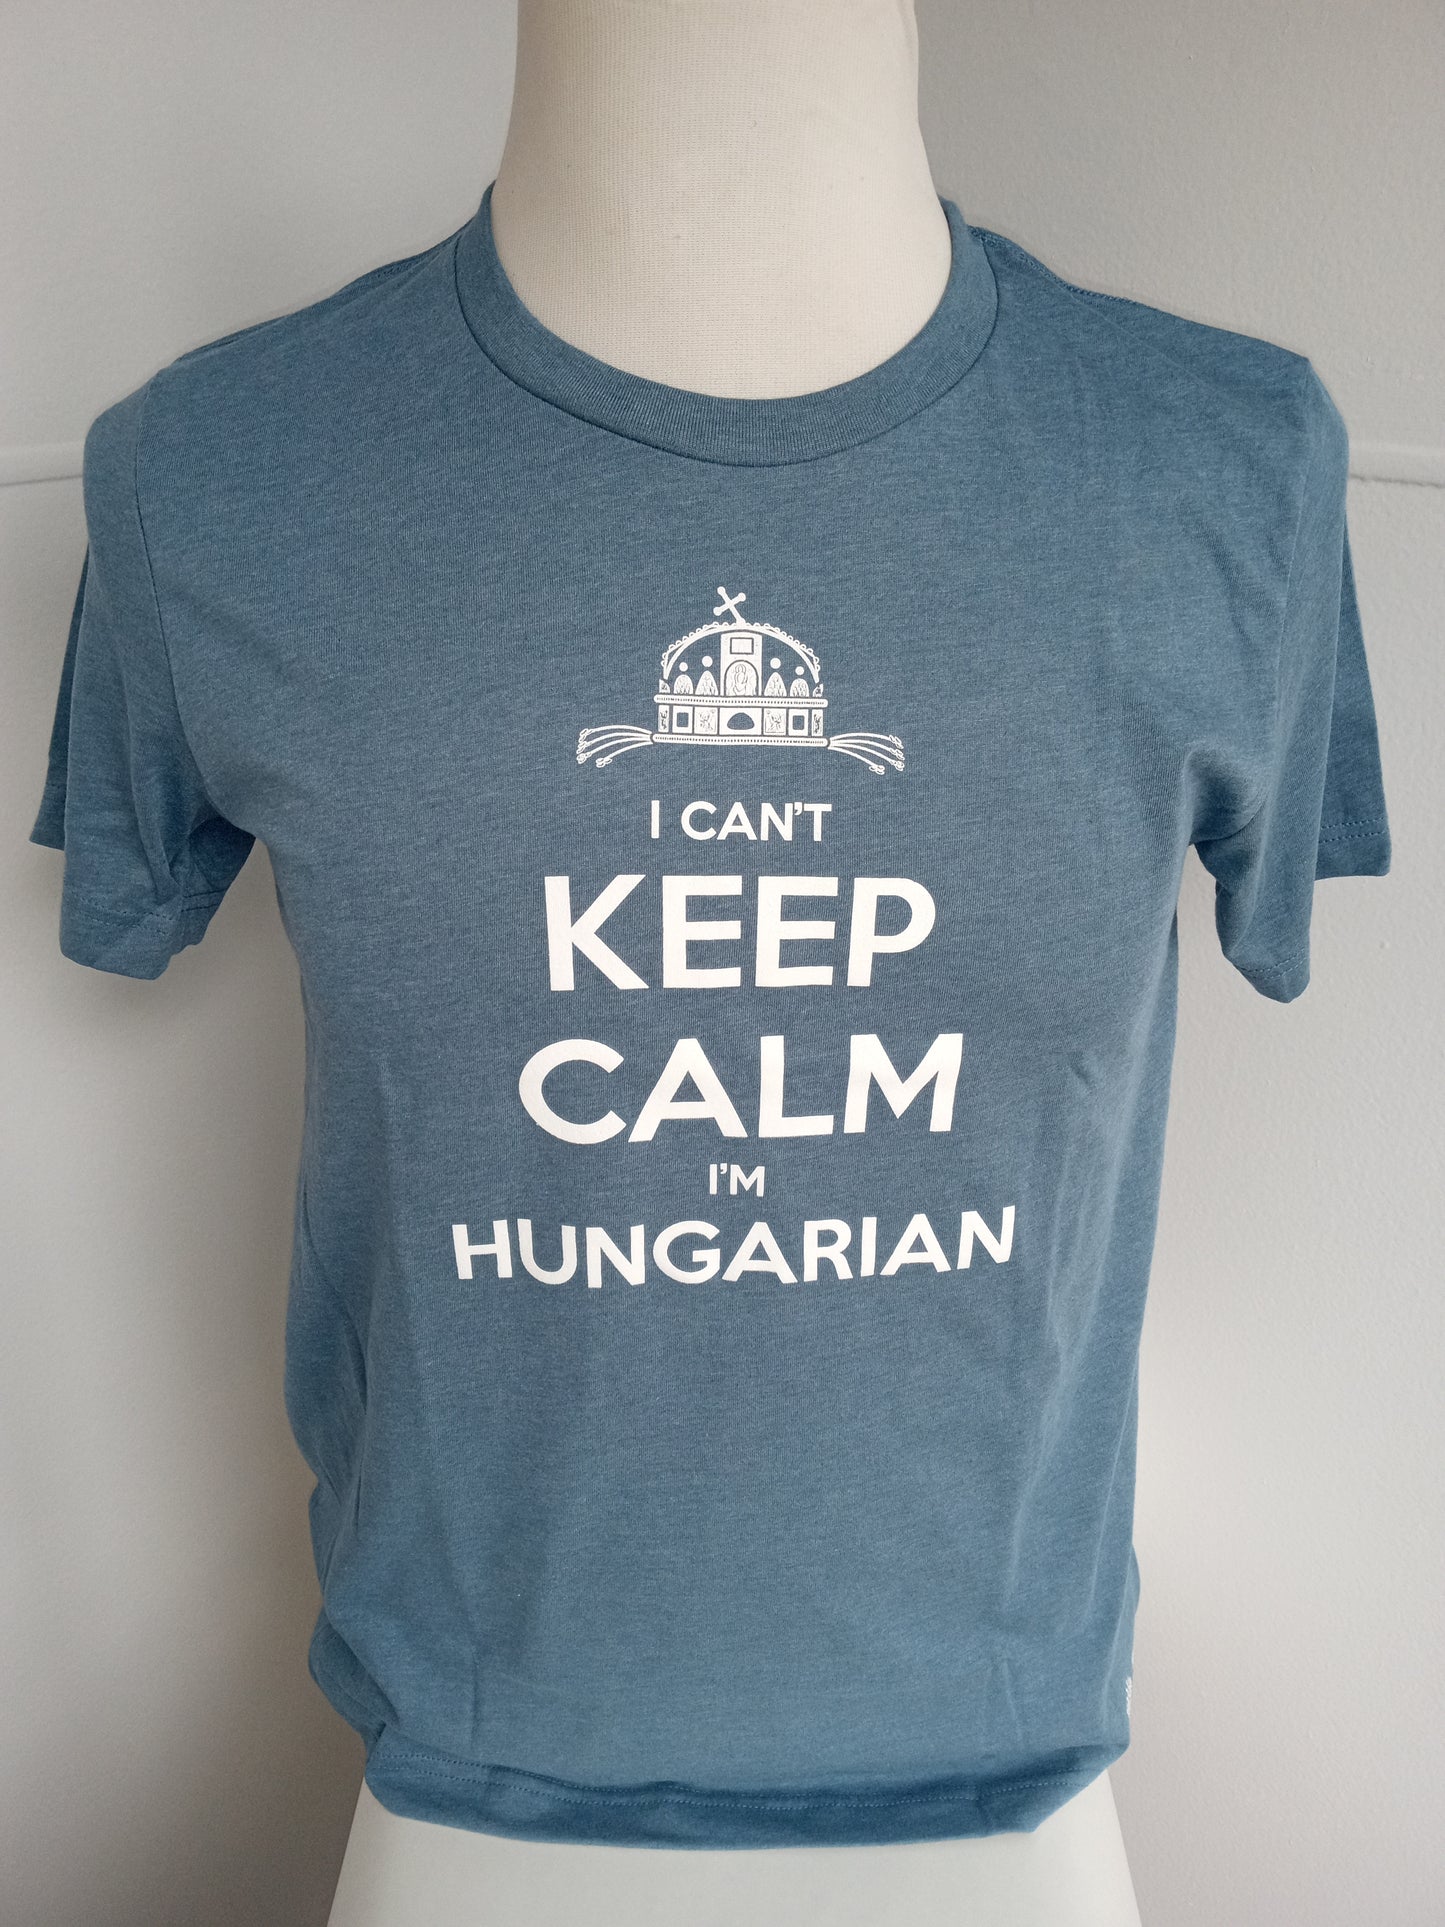 Can't keep calm, I am Hungarian